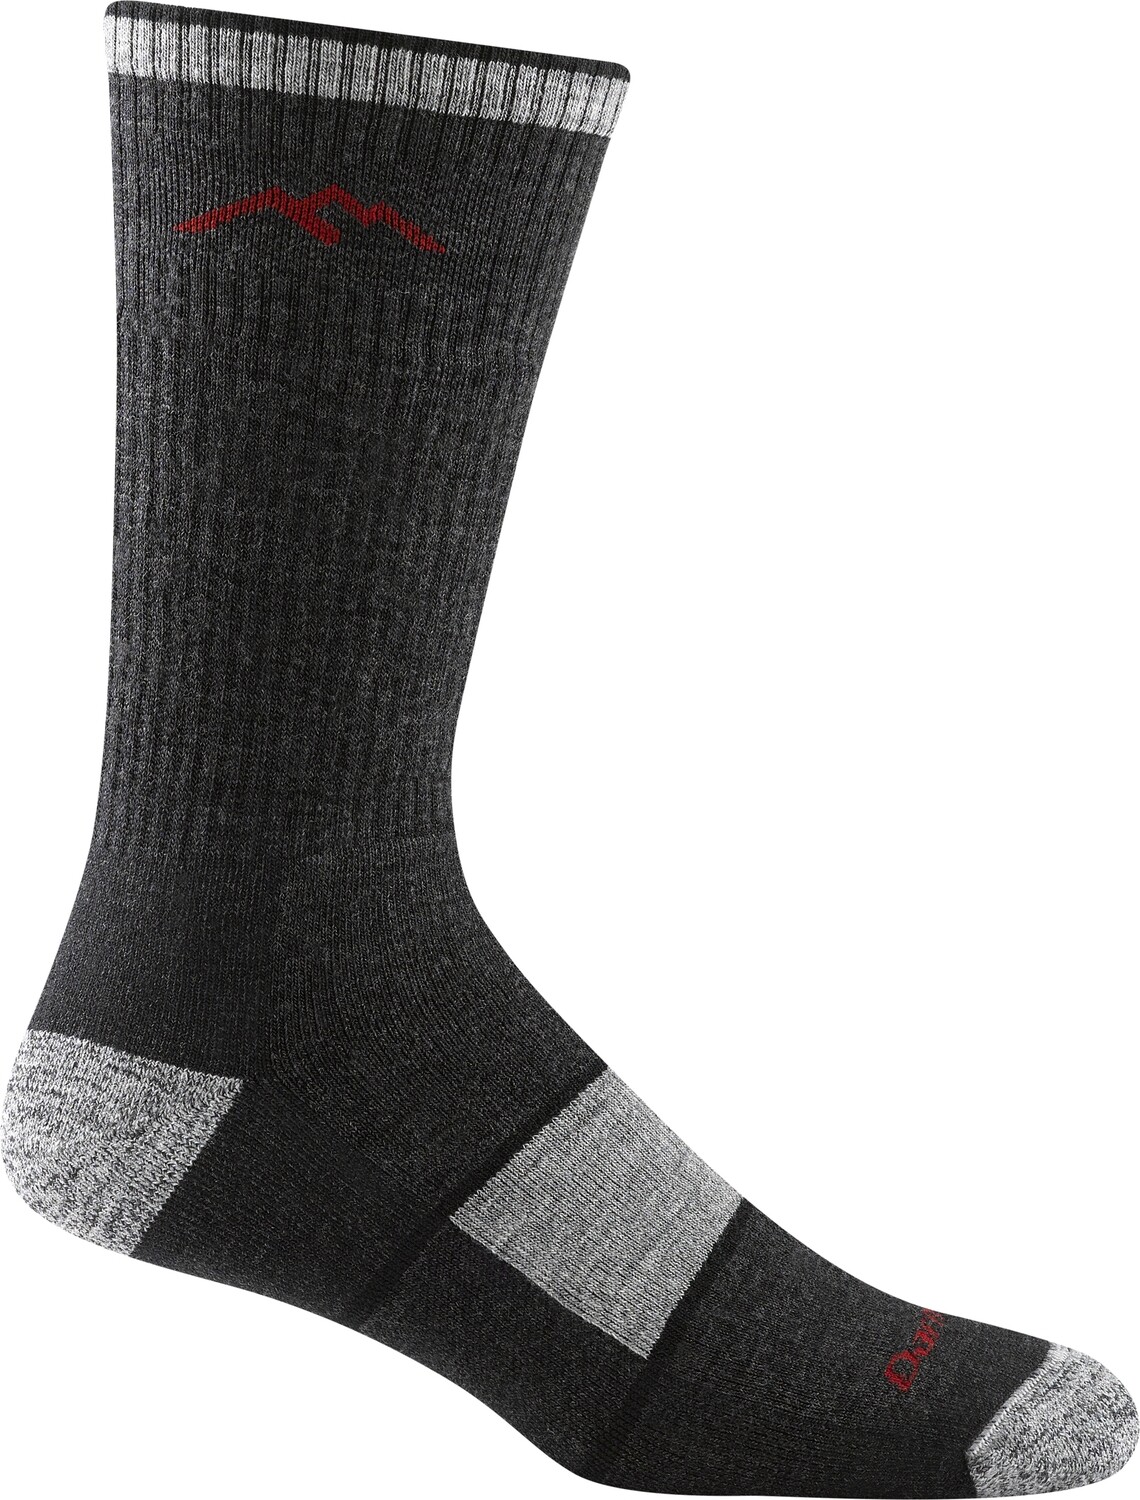 Men's/Unisex 1405 Hiker Boot Midweight Full Cushion Sock